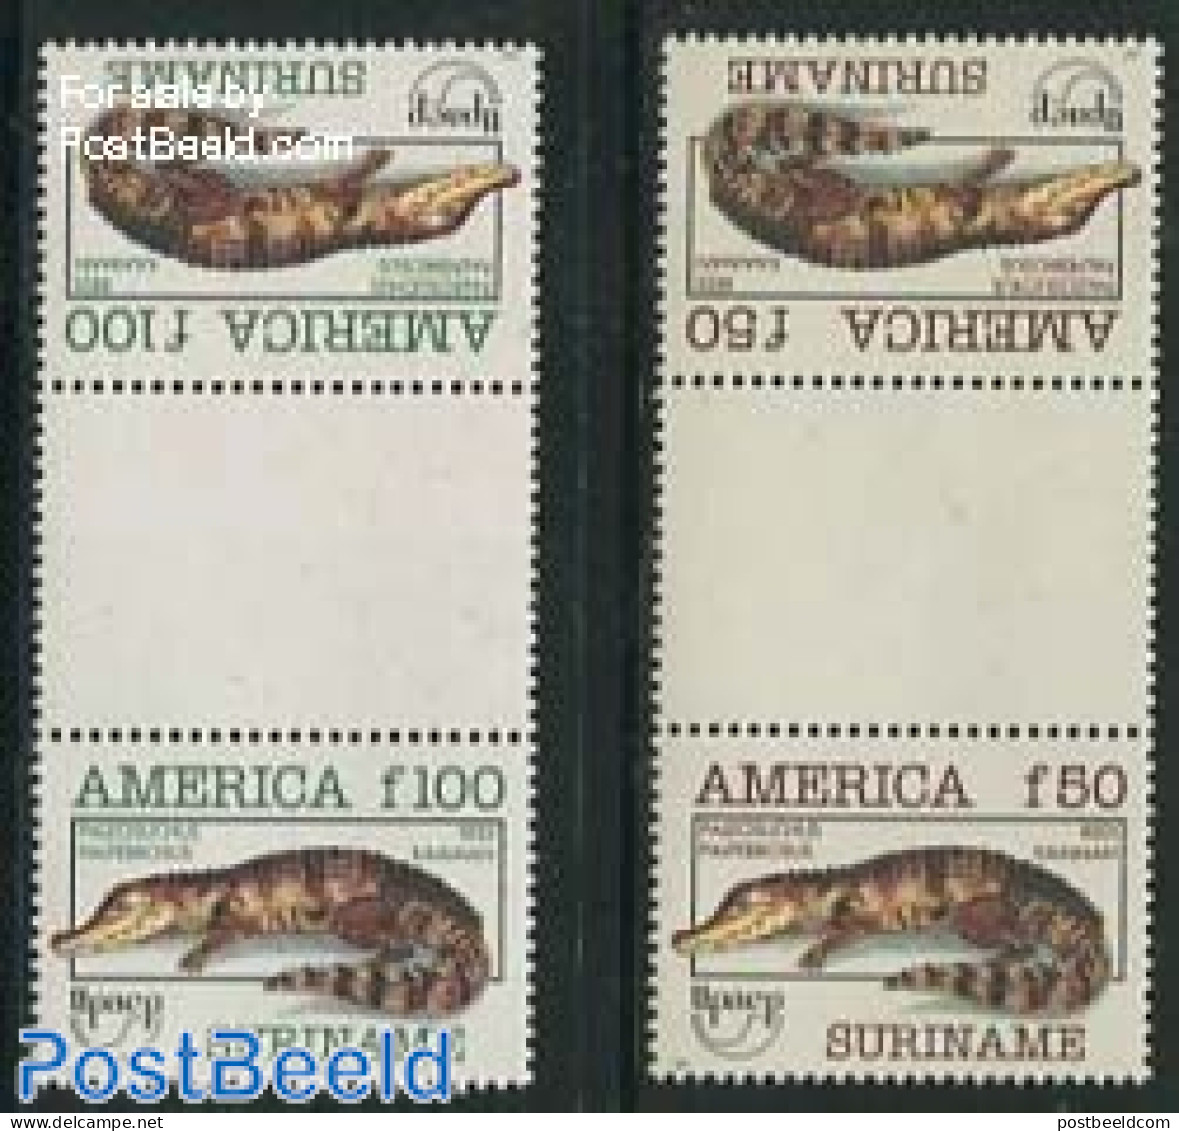 Suriname, Republic 1993 UPAE, Crocodile 2v, Gutter Pairs, Mint NH, Nature - Reptiles - U.P.A.E. - Surinam